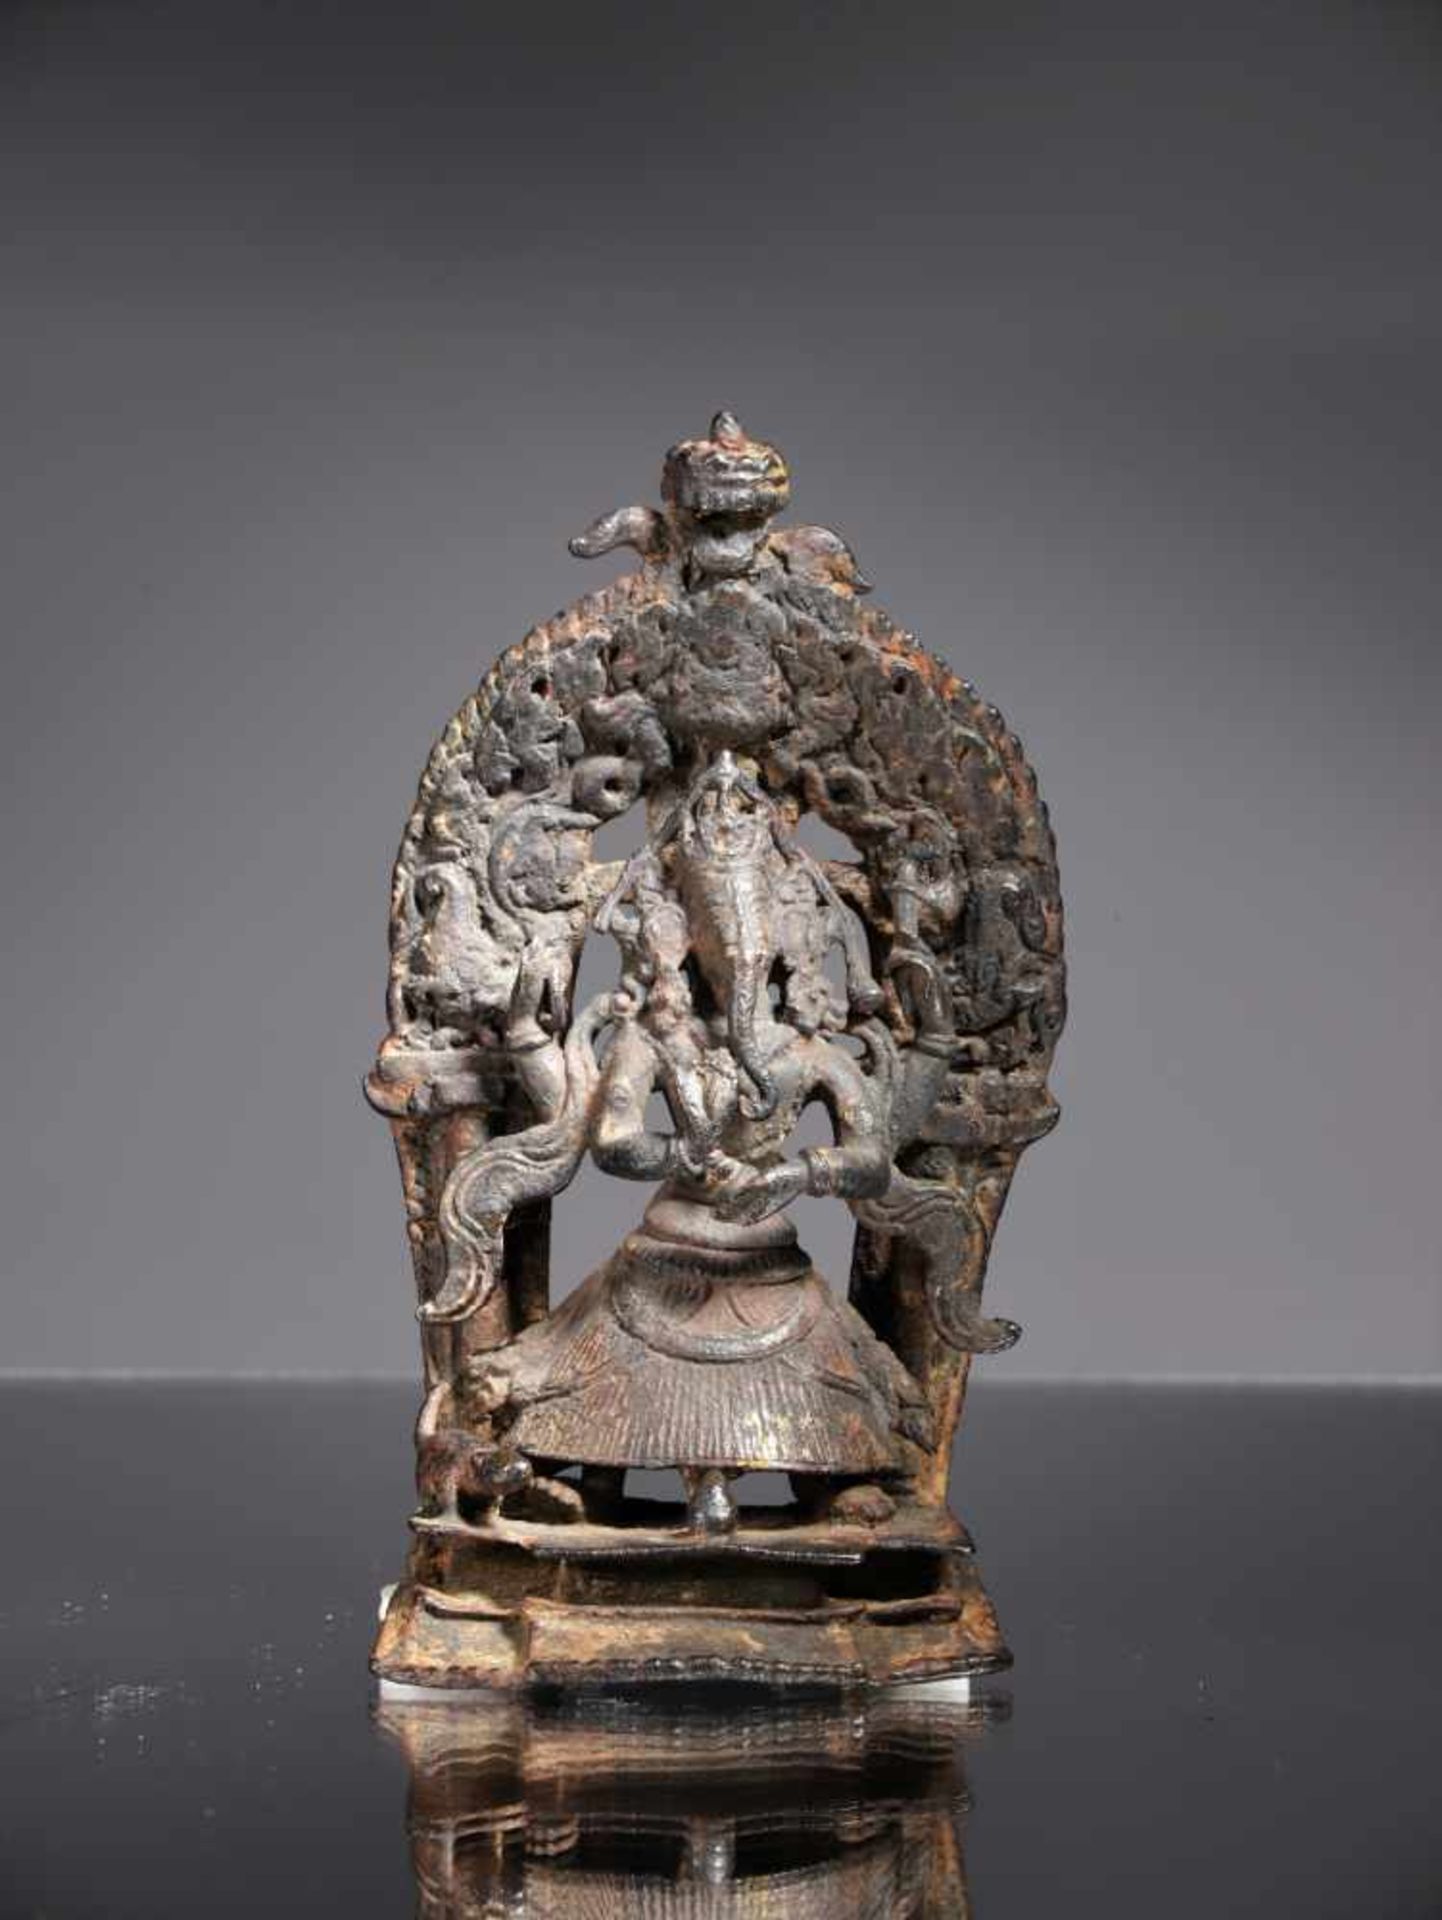 STANDING GANESHABronze,Nepal, 16th centuryDimensions: Height 11 cmWeight: 242 gramsAn old bronze